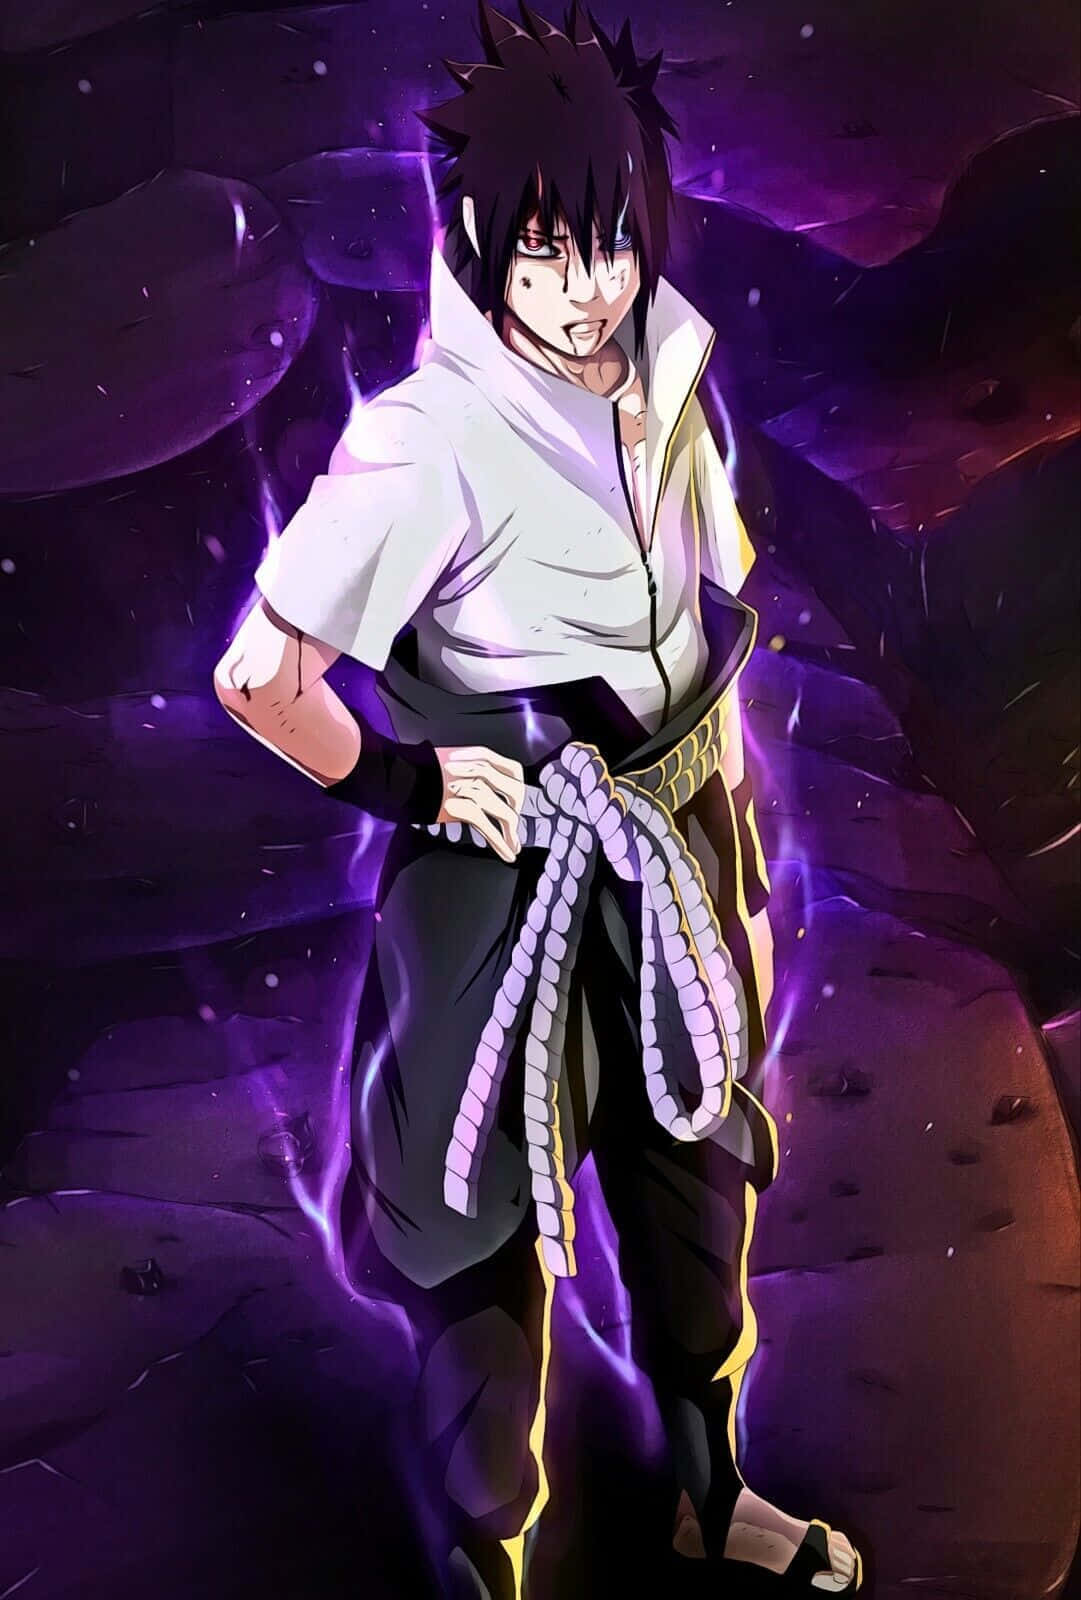 Sasukeuchiha - Un Amato Ninja Della Serie Anime Naruto